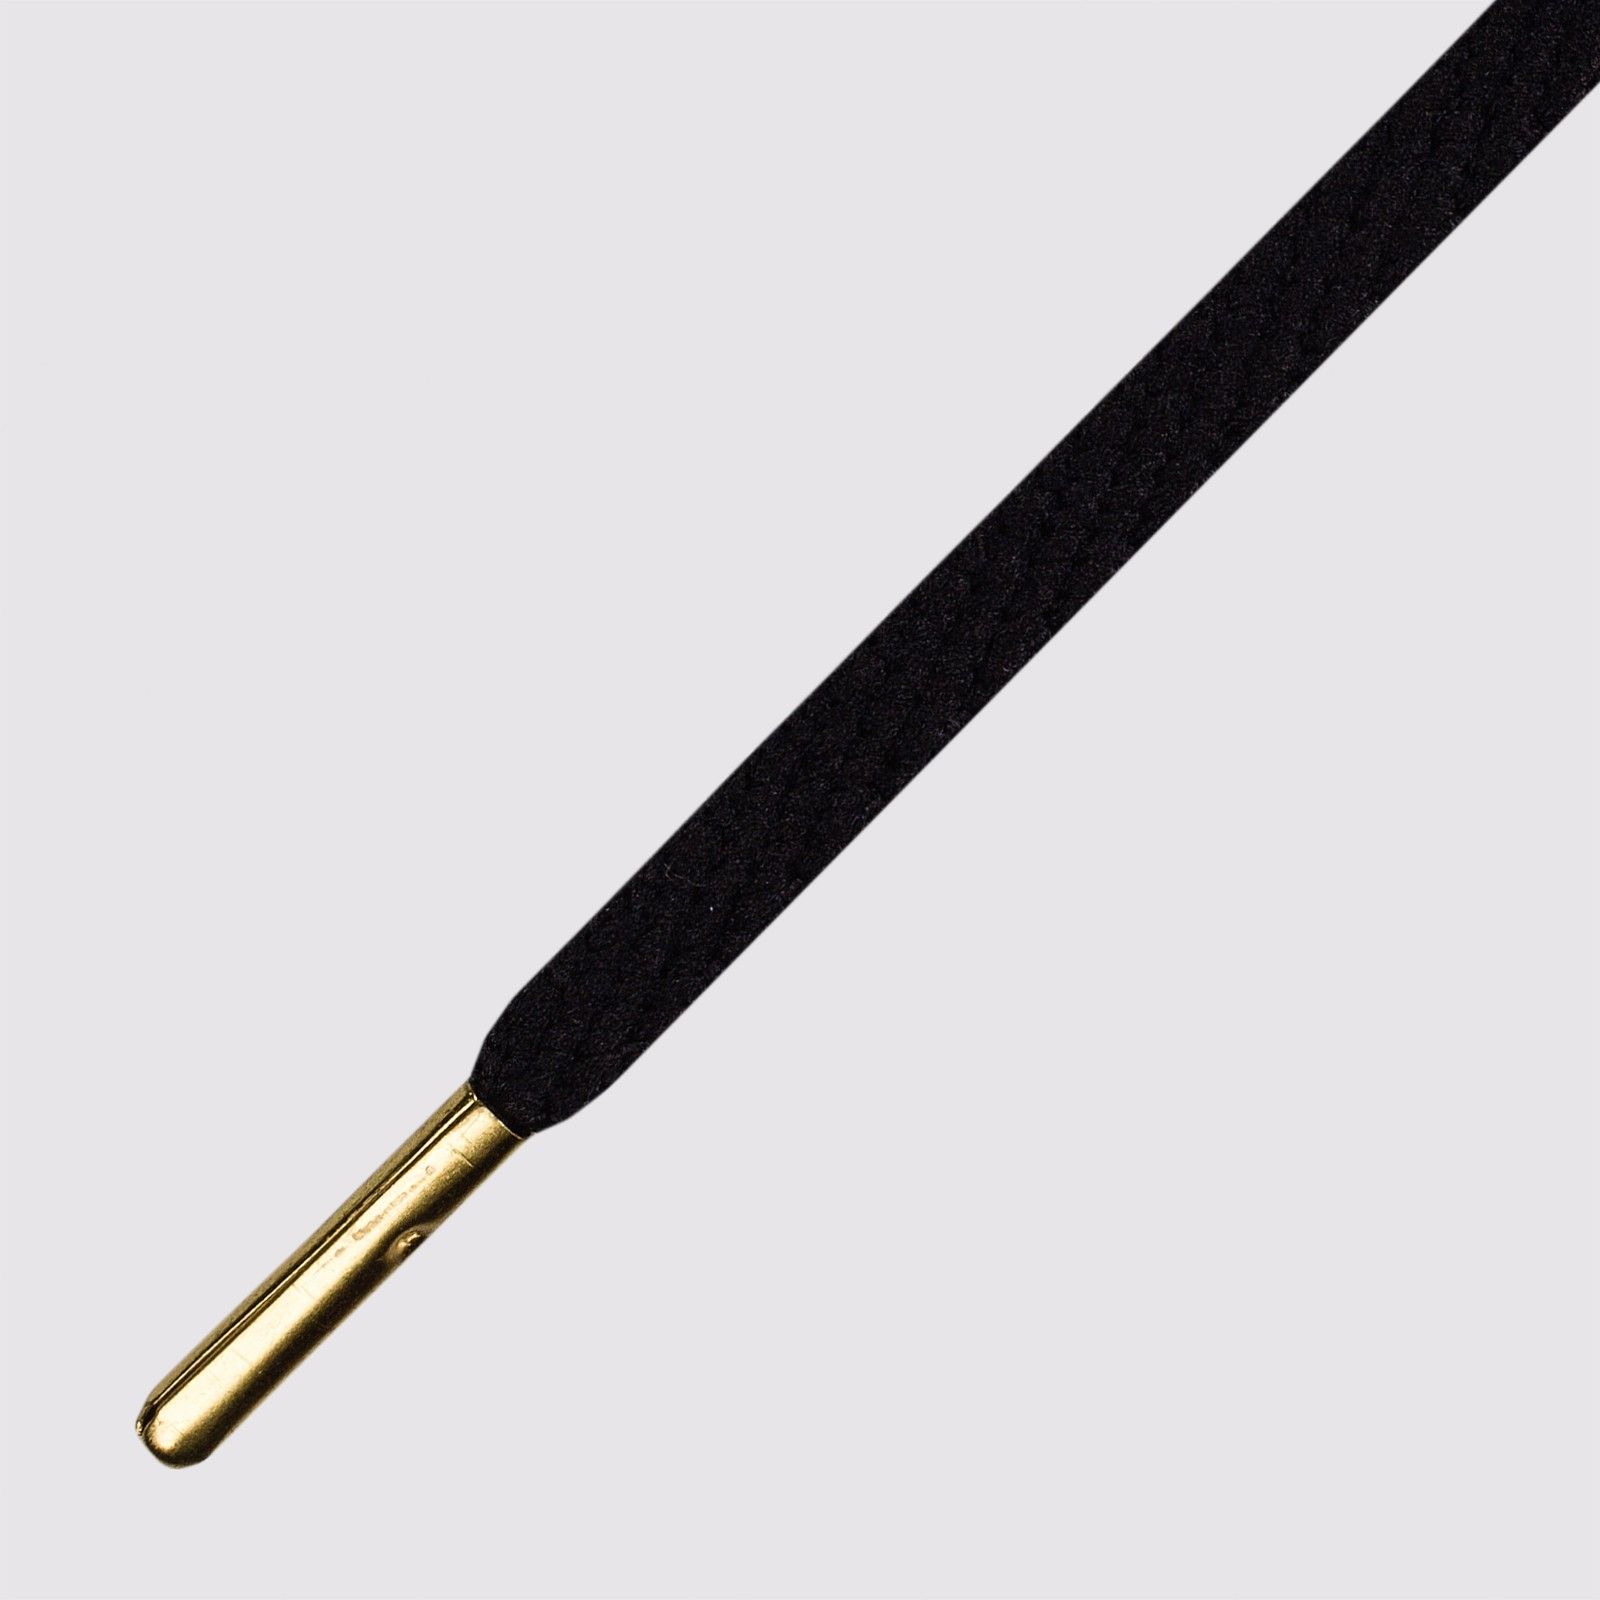  Skinnies Black Gold Tip- זוג שרוכים צרים בצבע שחור עם אגלט בצבע זהב